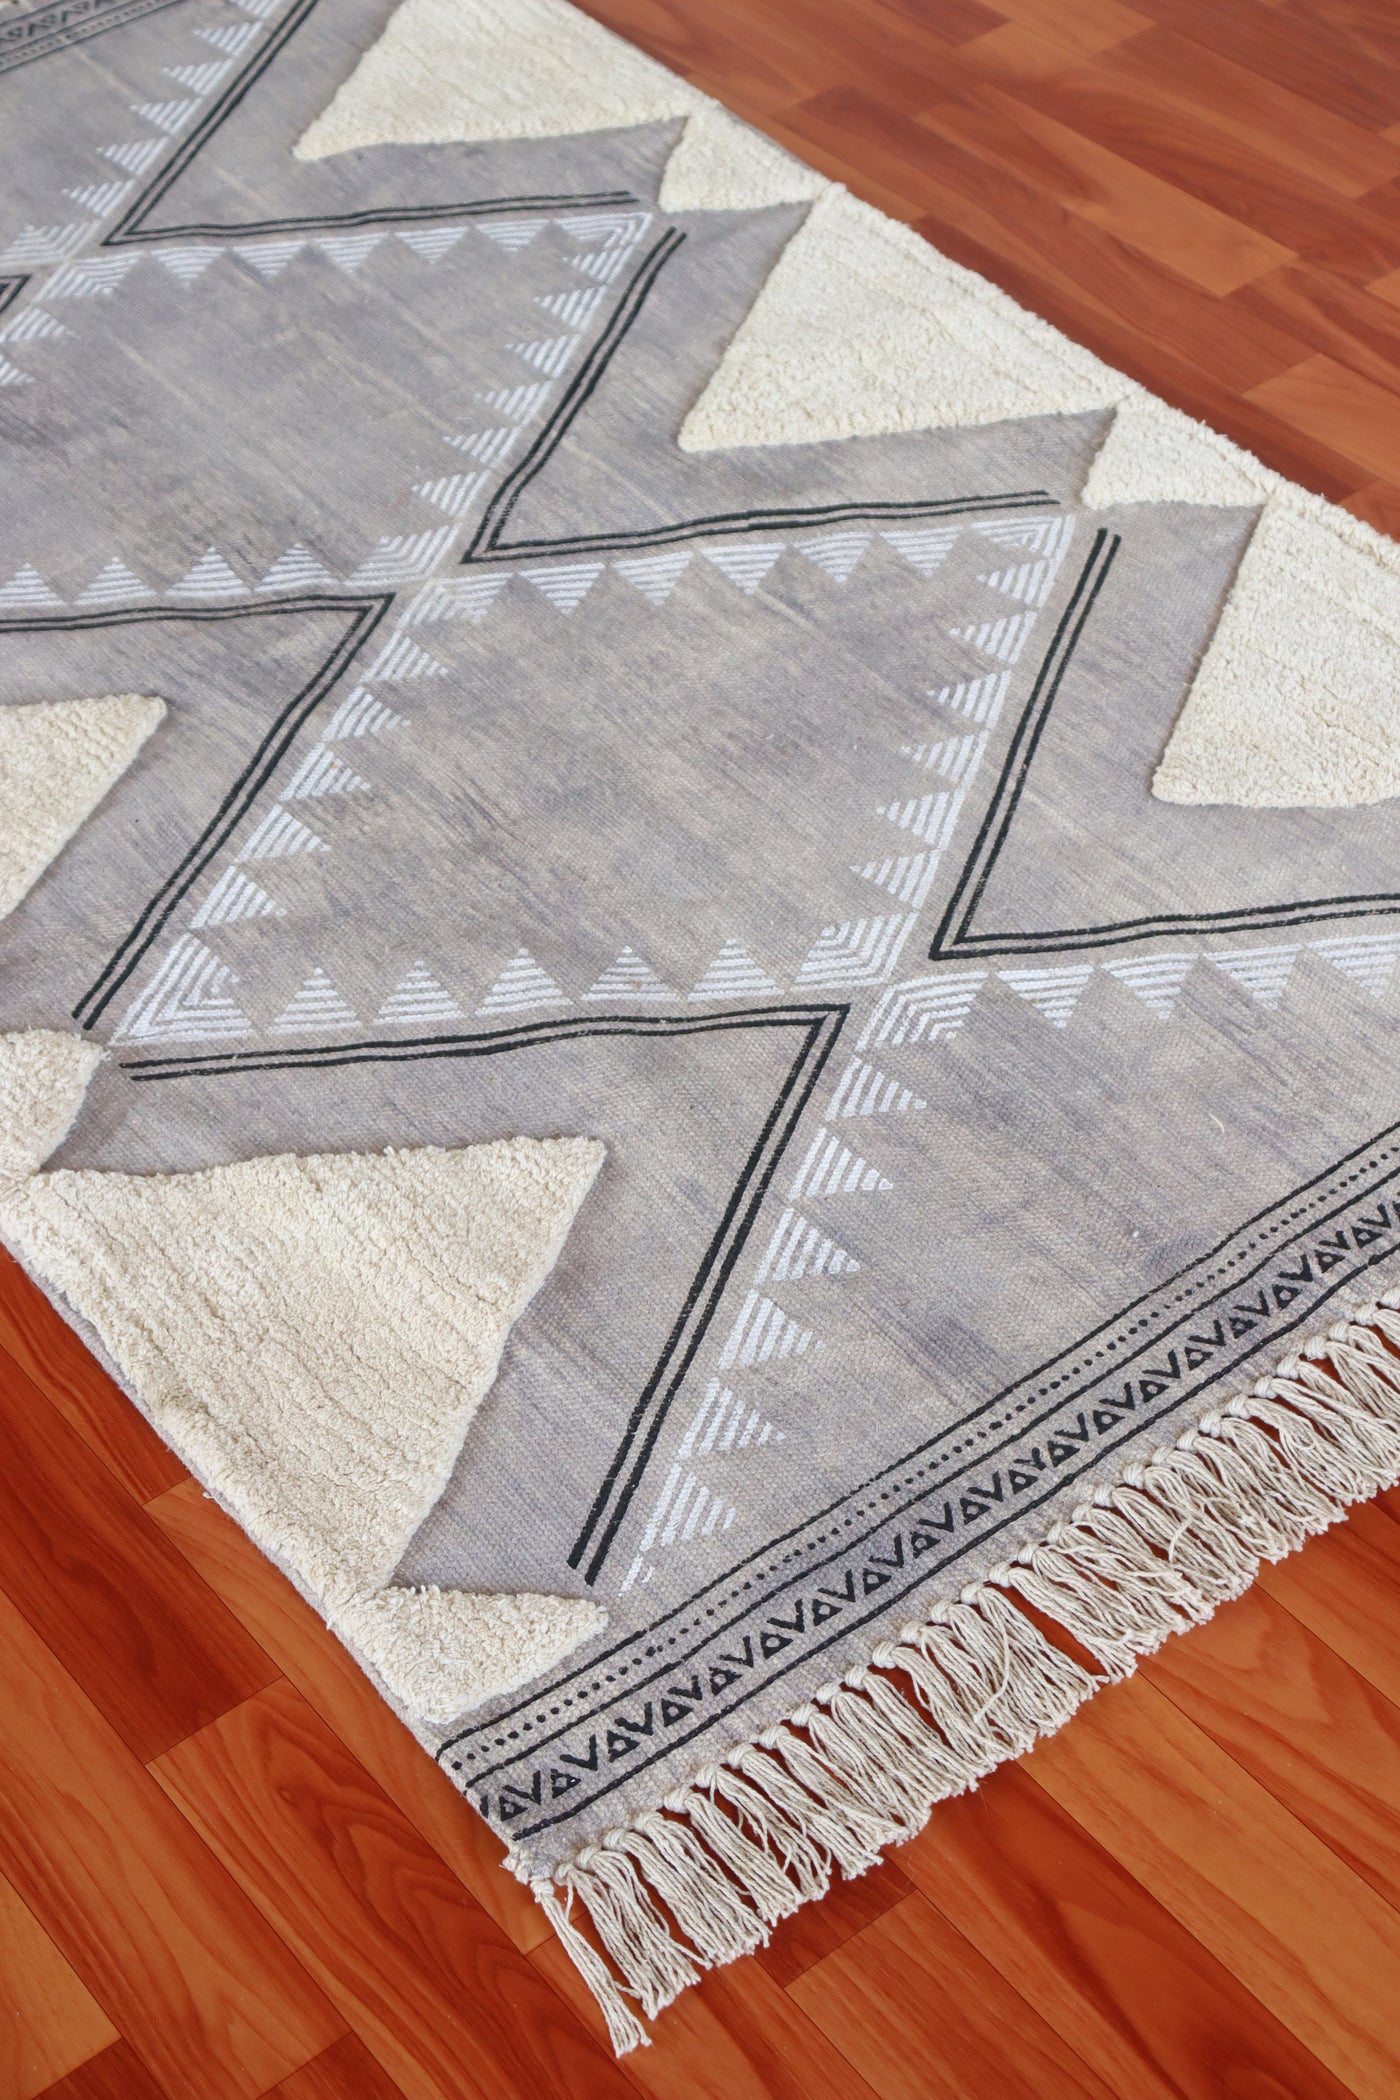 EMBROIDERED BOHO RUG, Living room rug, patio cotton rug, homedecor rug, 2x3, 3x5, 4x6 feet